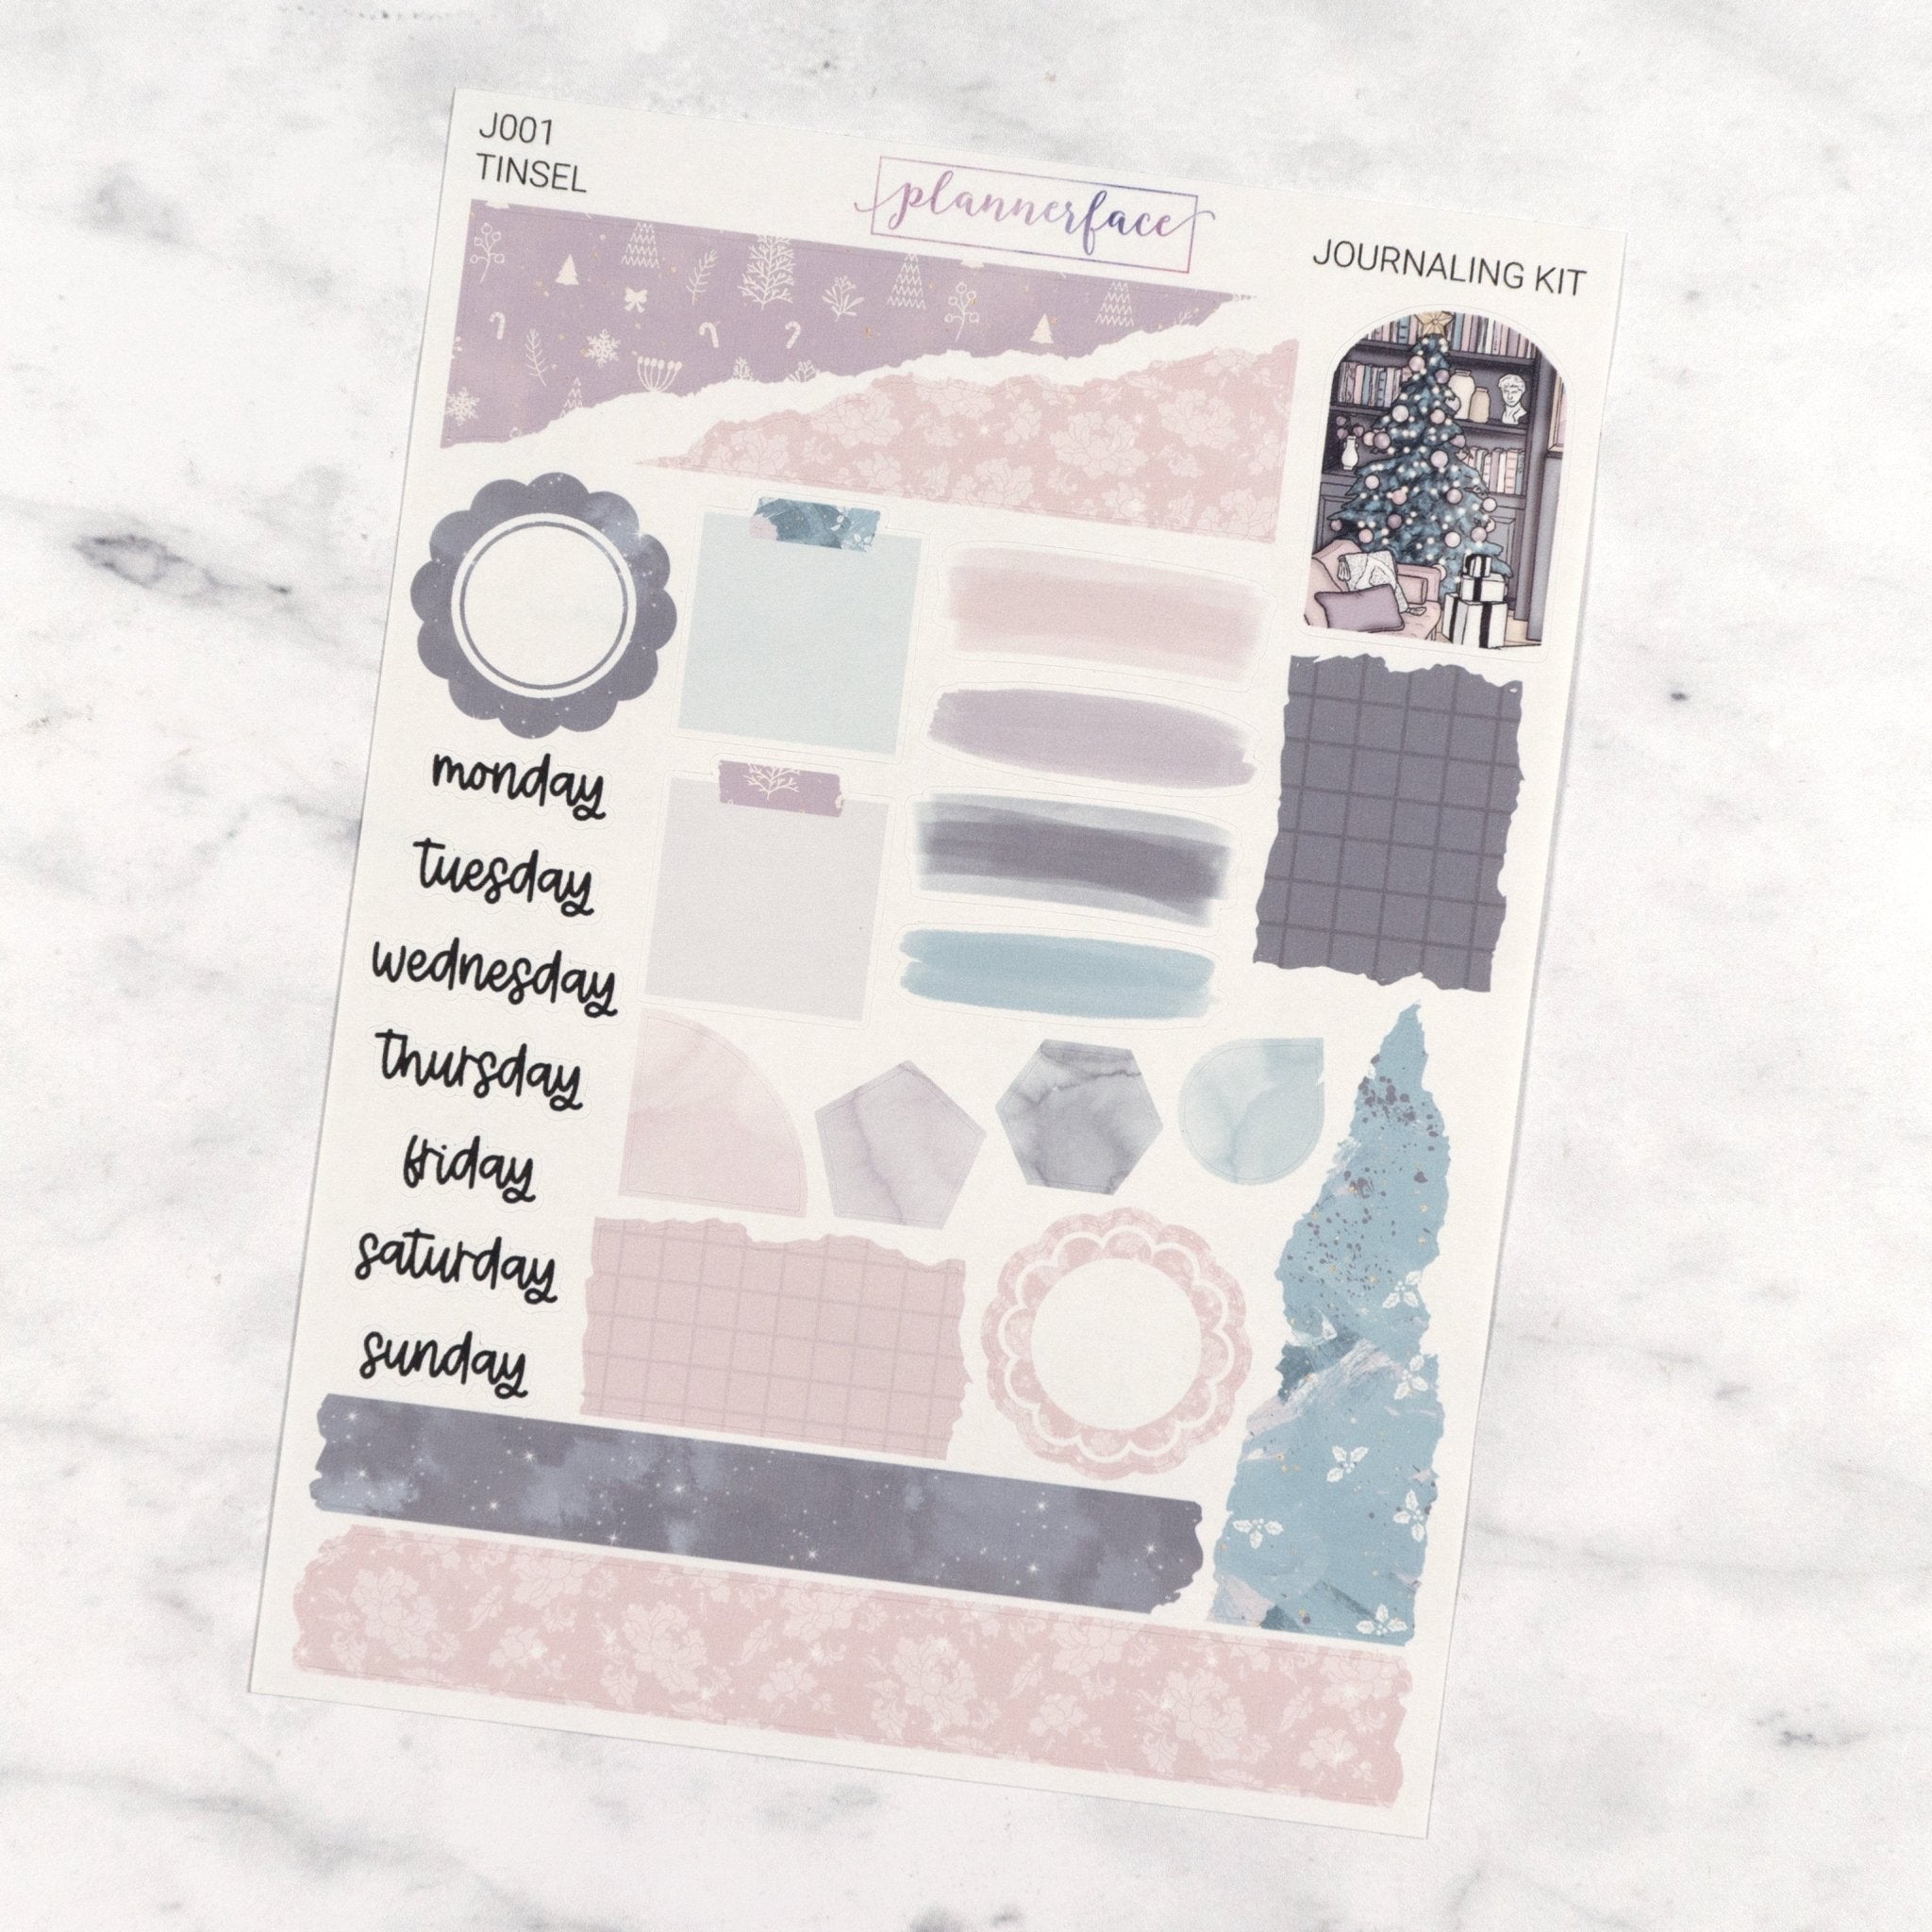 Tinsel | Journaling Kit by Plannerface